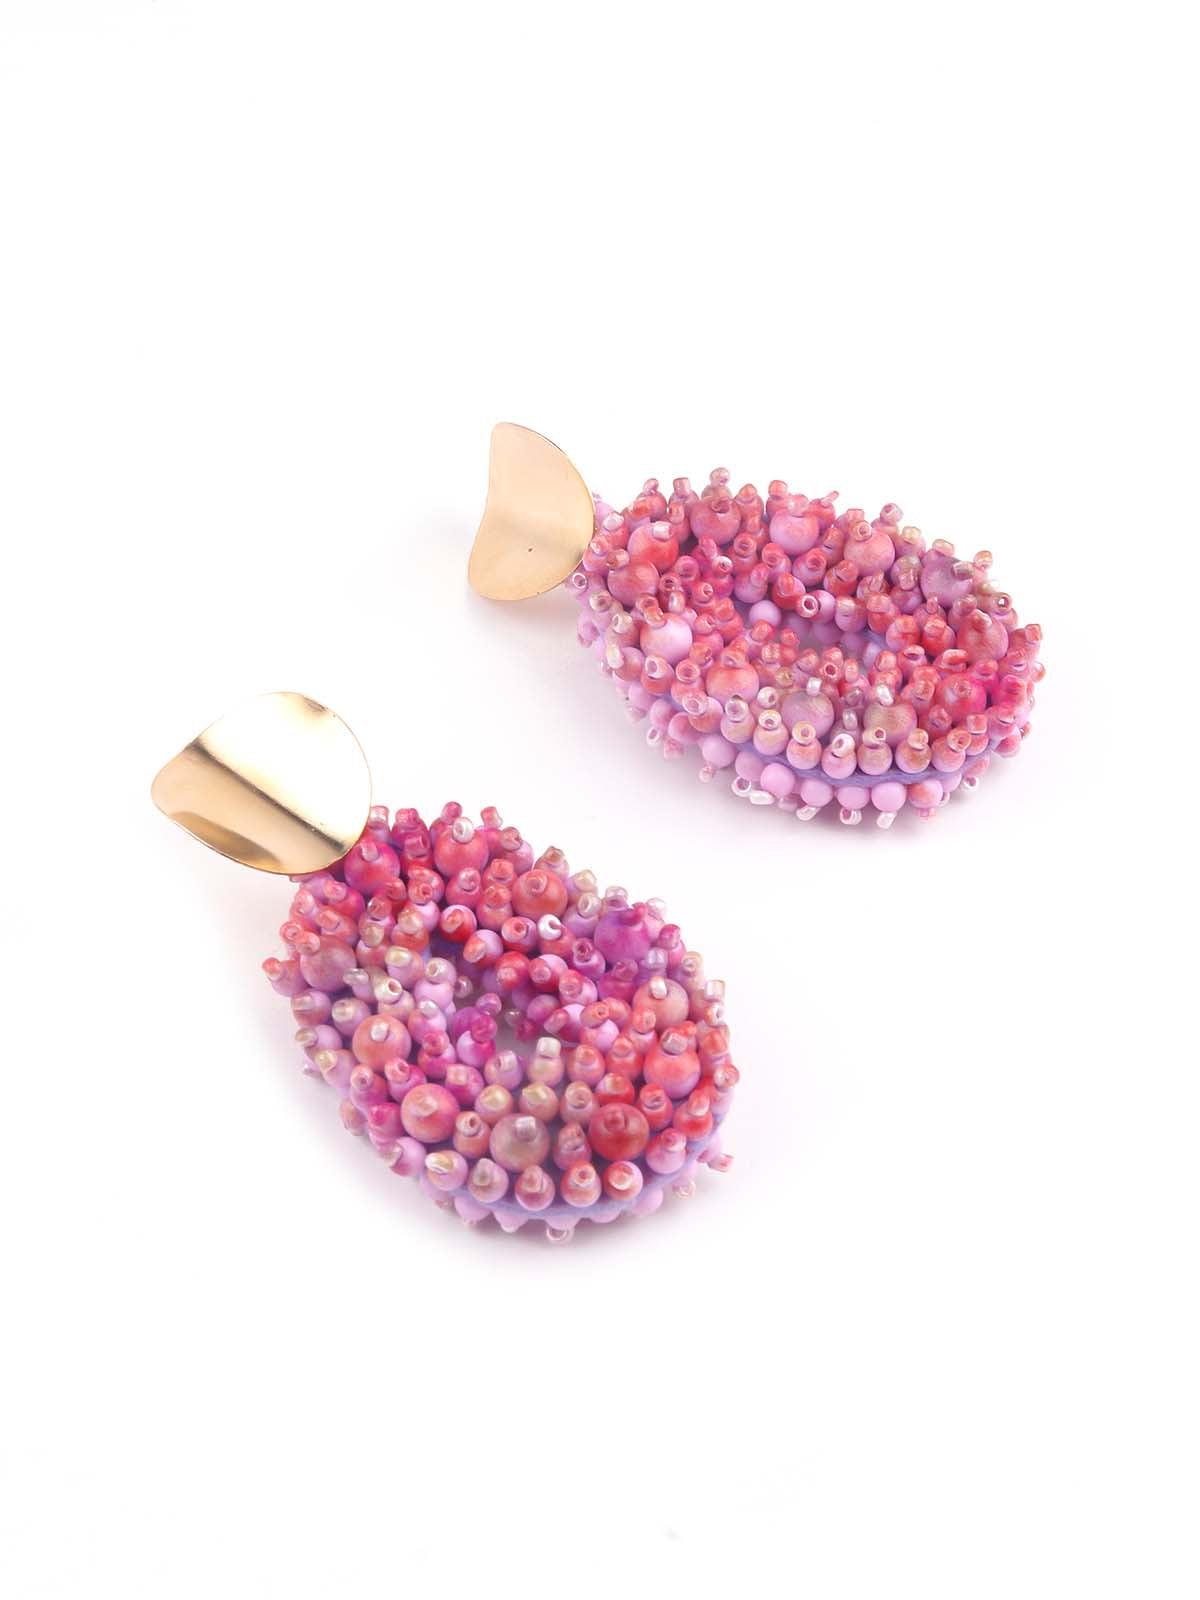 Pink gorgeous beaded earrings - Odette